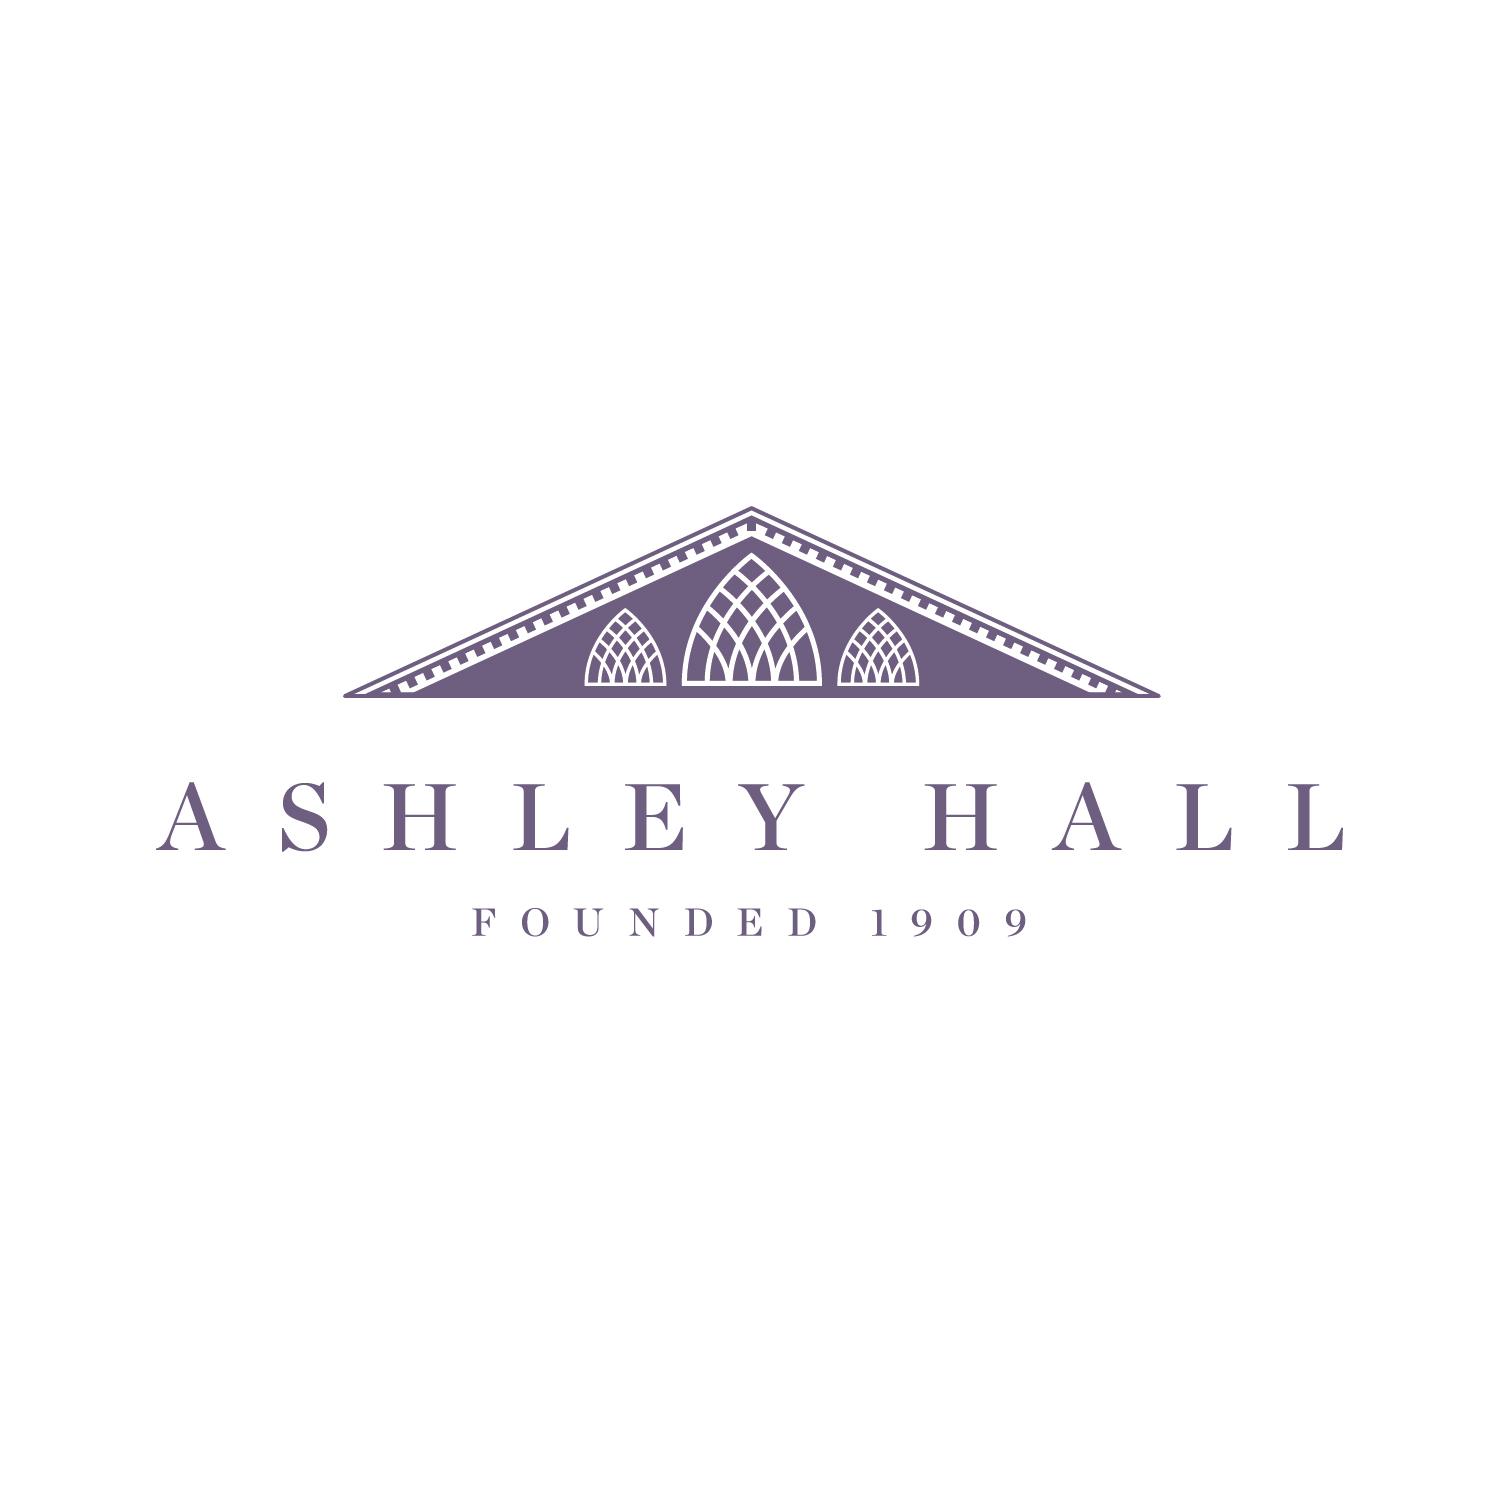 Hall Logo - Private School in Charleston, South Carolina